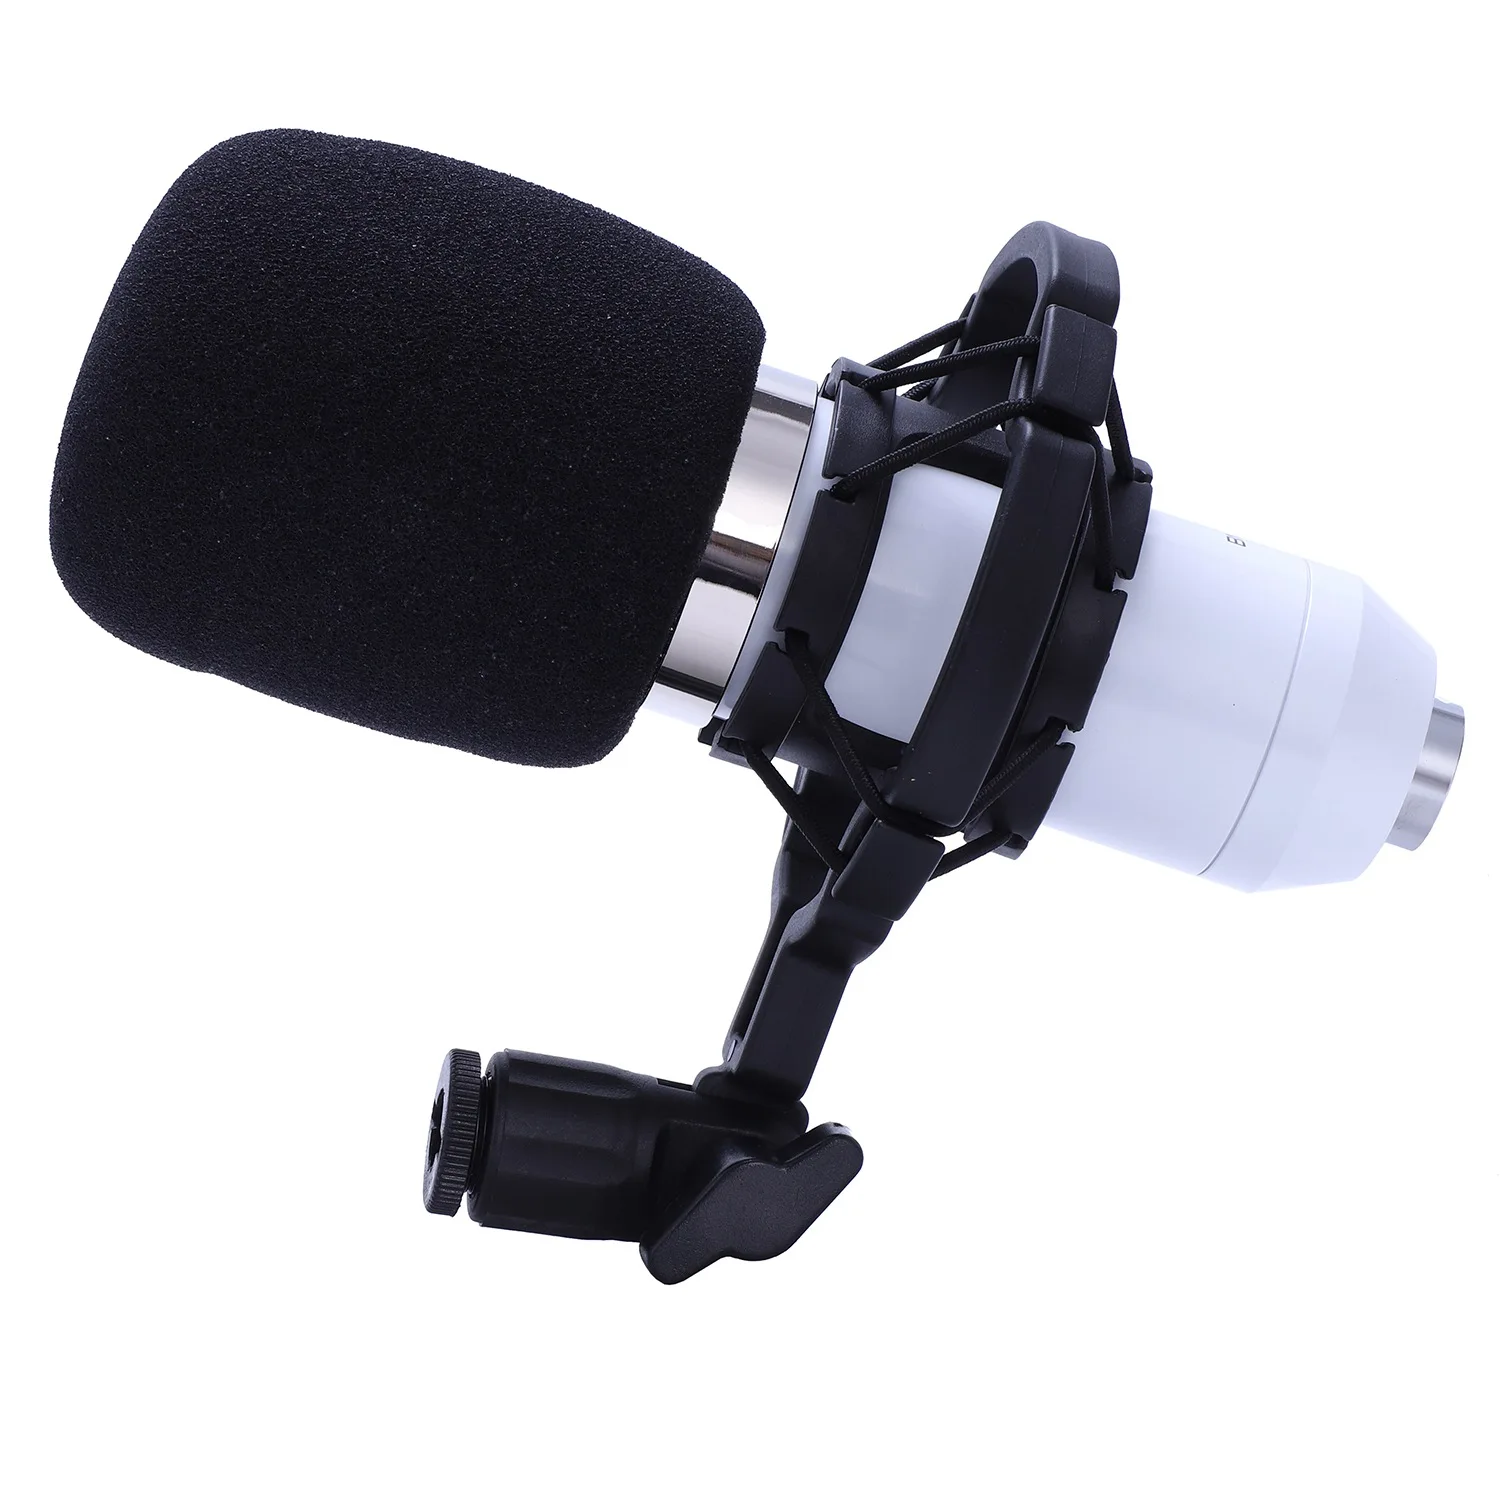 

BM 800 Karaoke Capacitor Microphone With Shock Mount Condenser Microphone Mic Kit For Radio Sound Recording KTV Singing